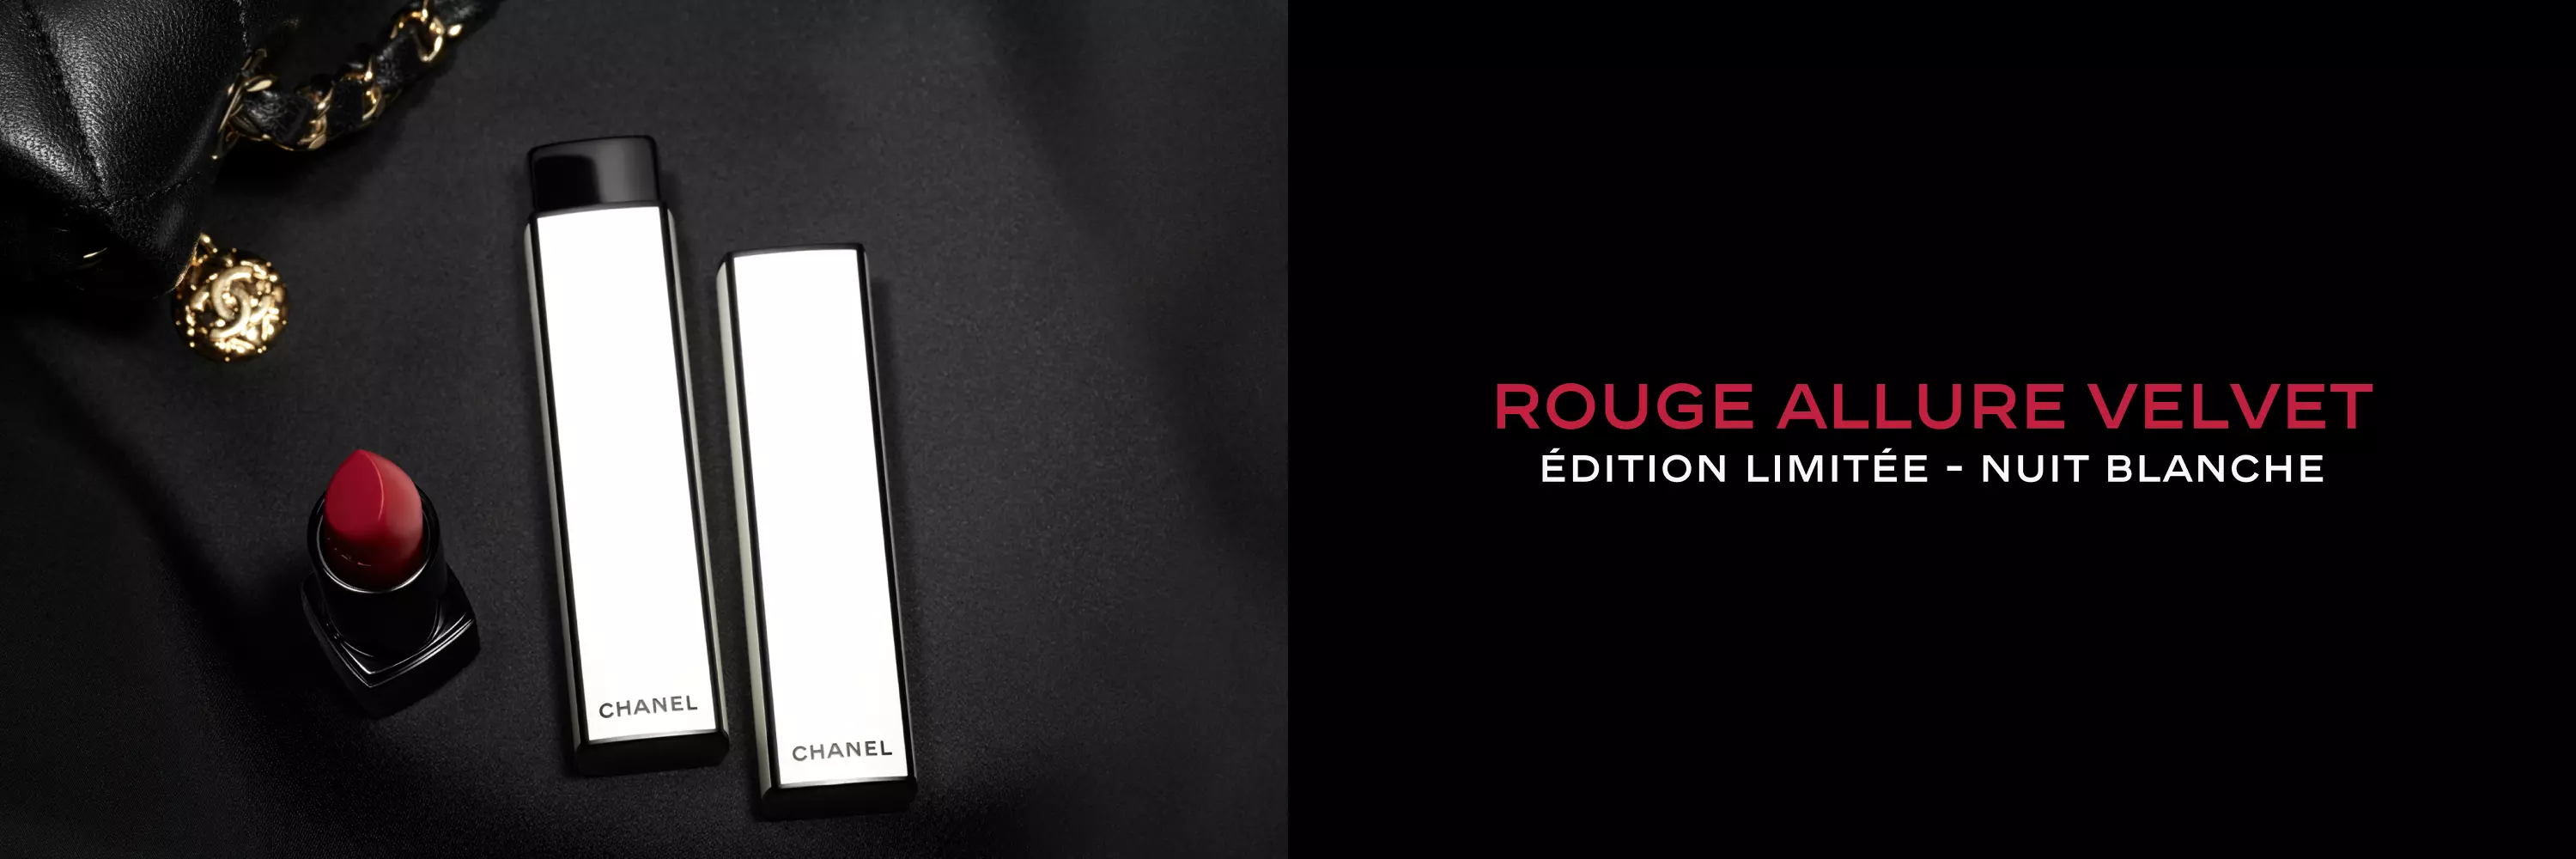 Chanel ROUGE ALLURE VELVET Limited Edition - Le Rouge Velours Lumineux 